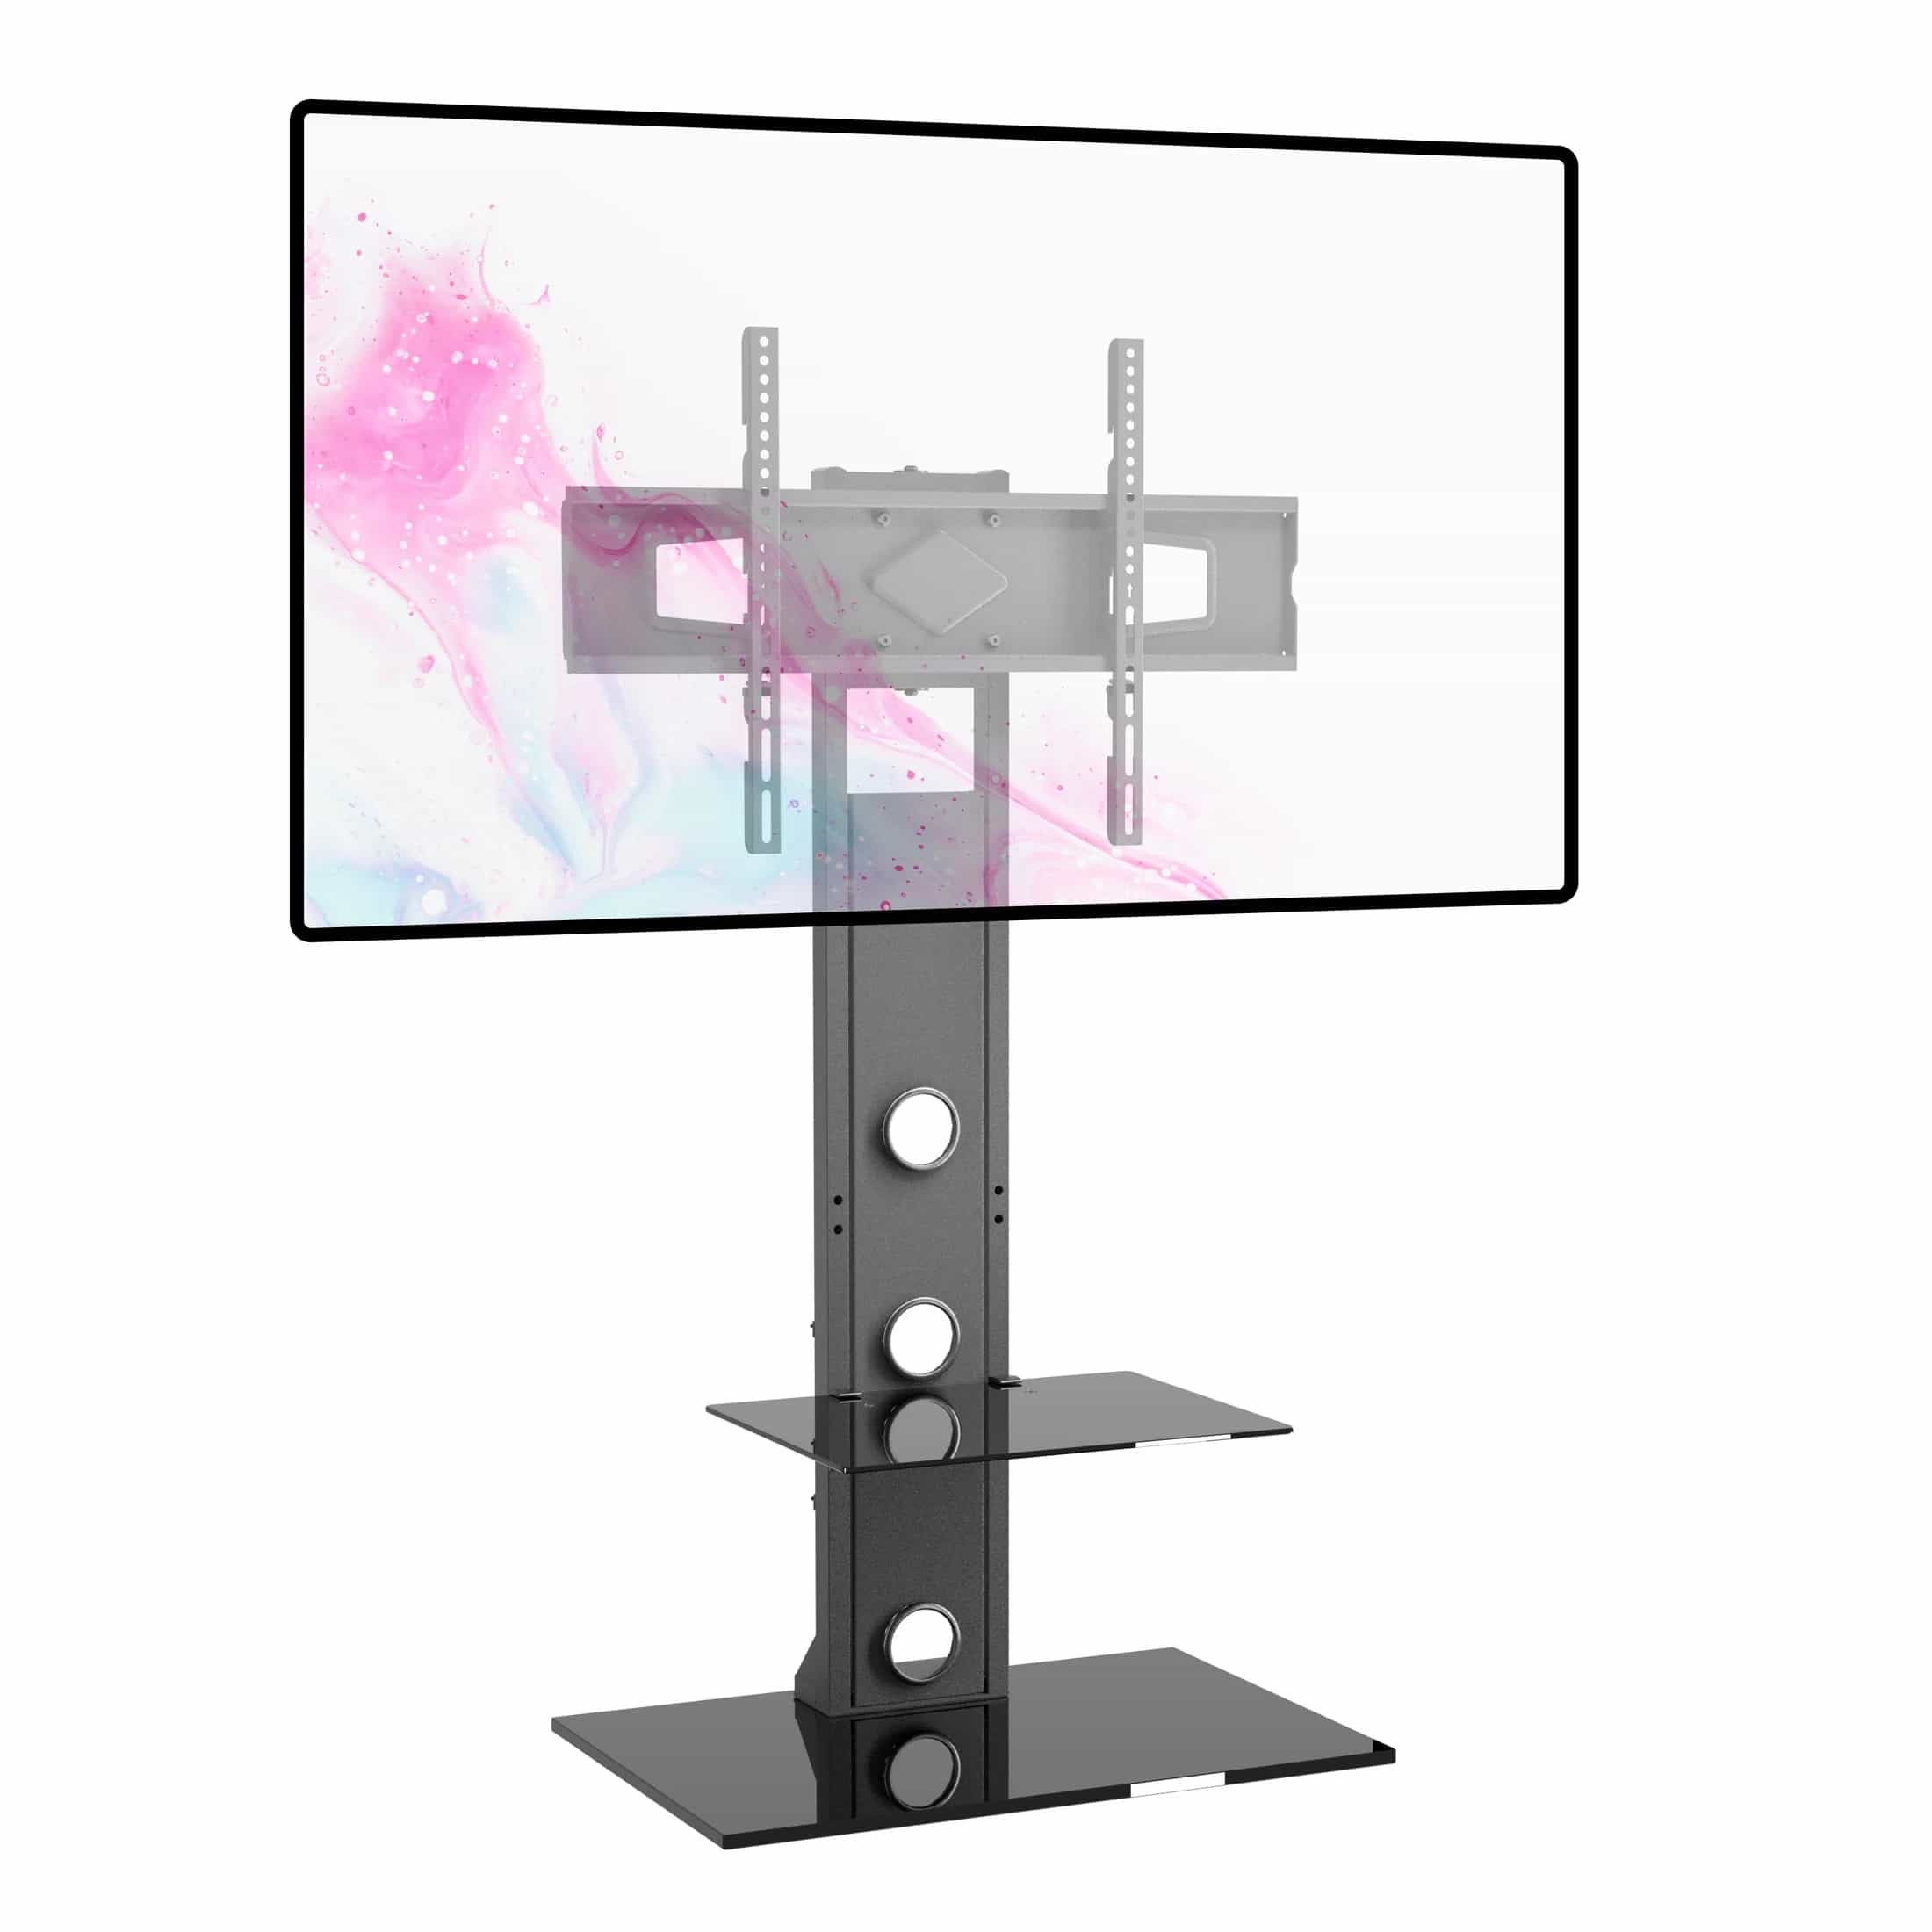 ProMounts Universal Swivel Floor TV Stand Mount for 37-70 inch Screens with Adjustable AV Shelf (ATMSS6401-X2)